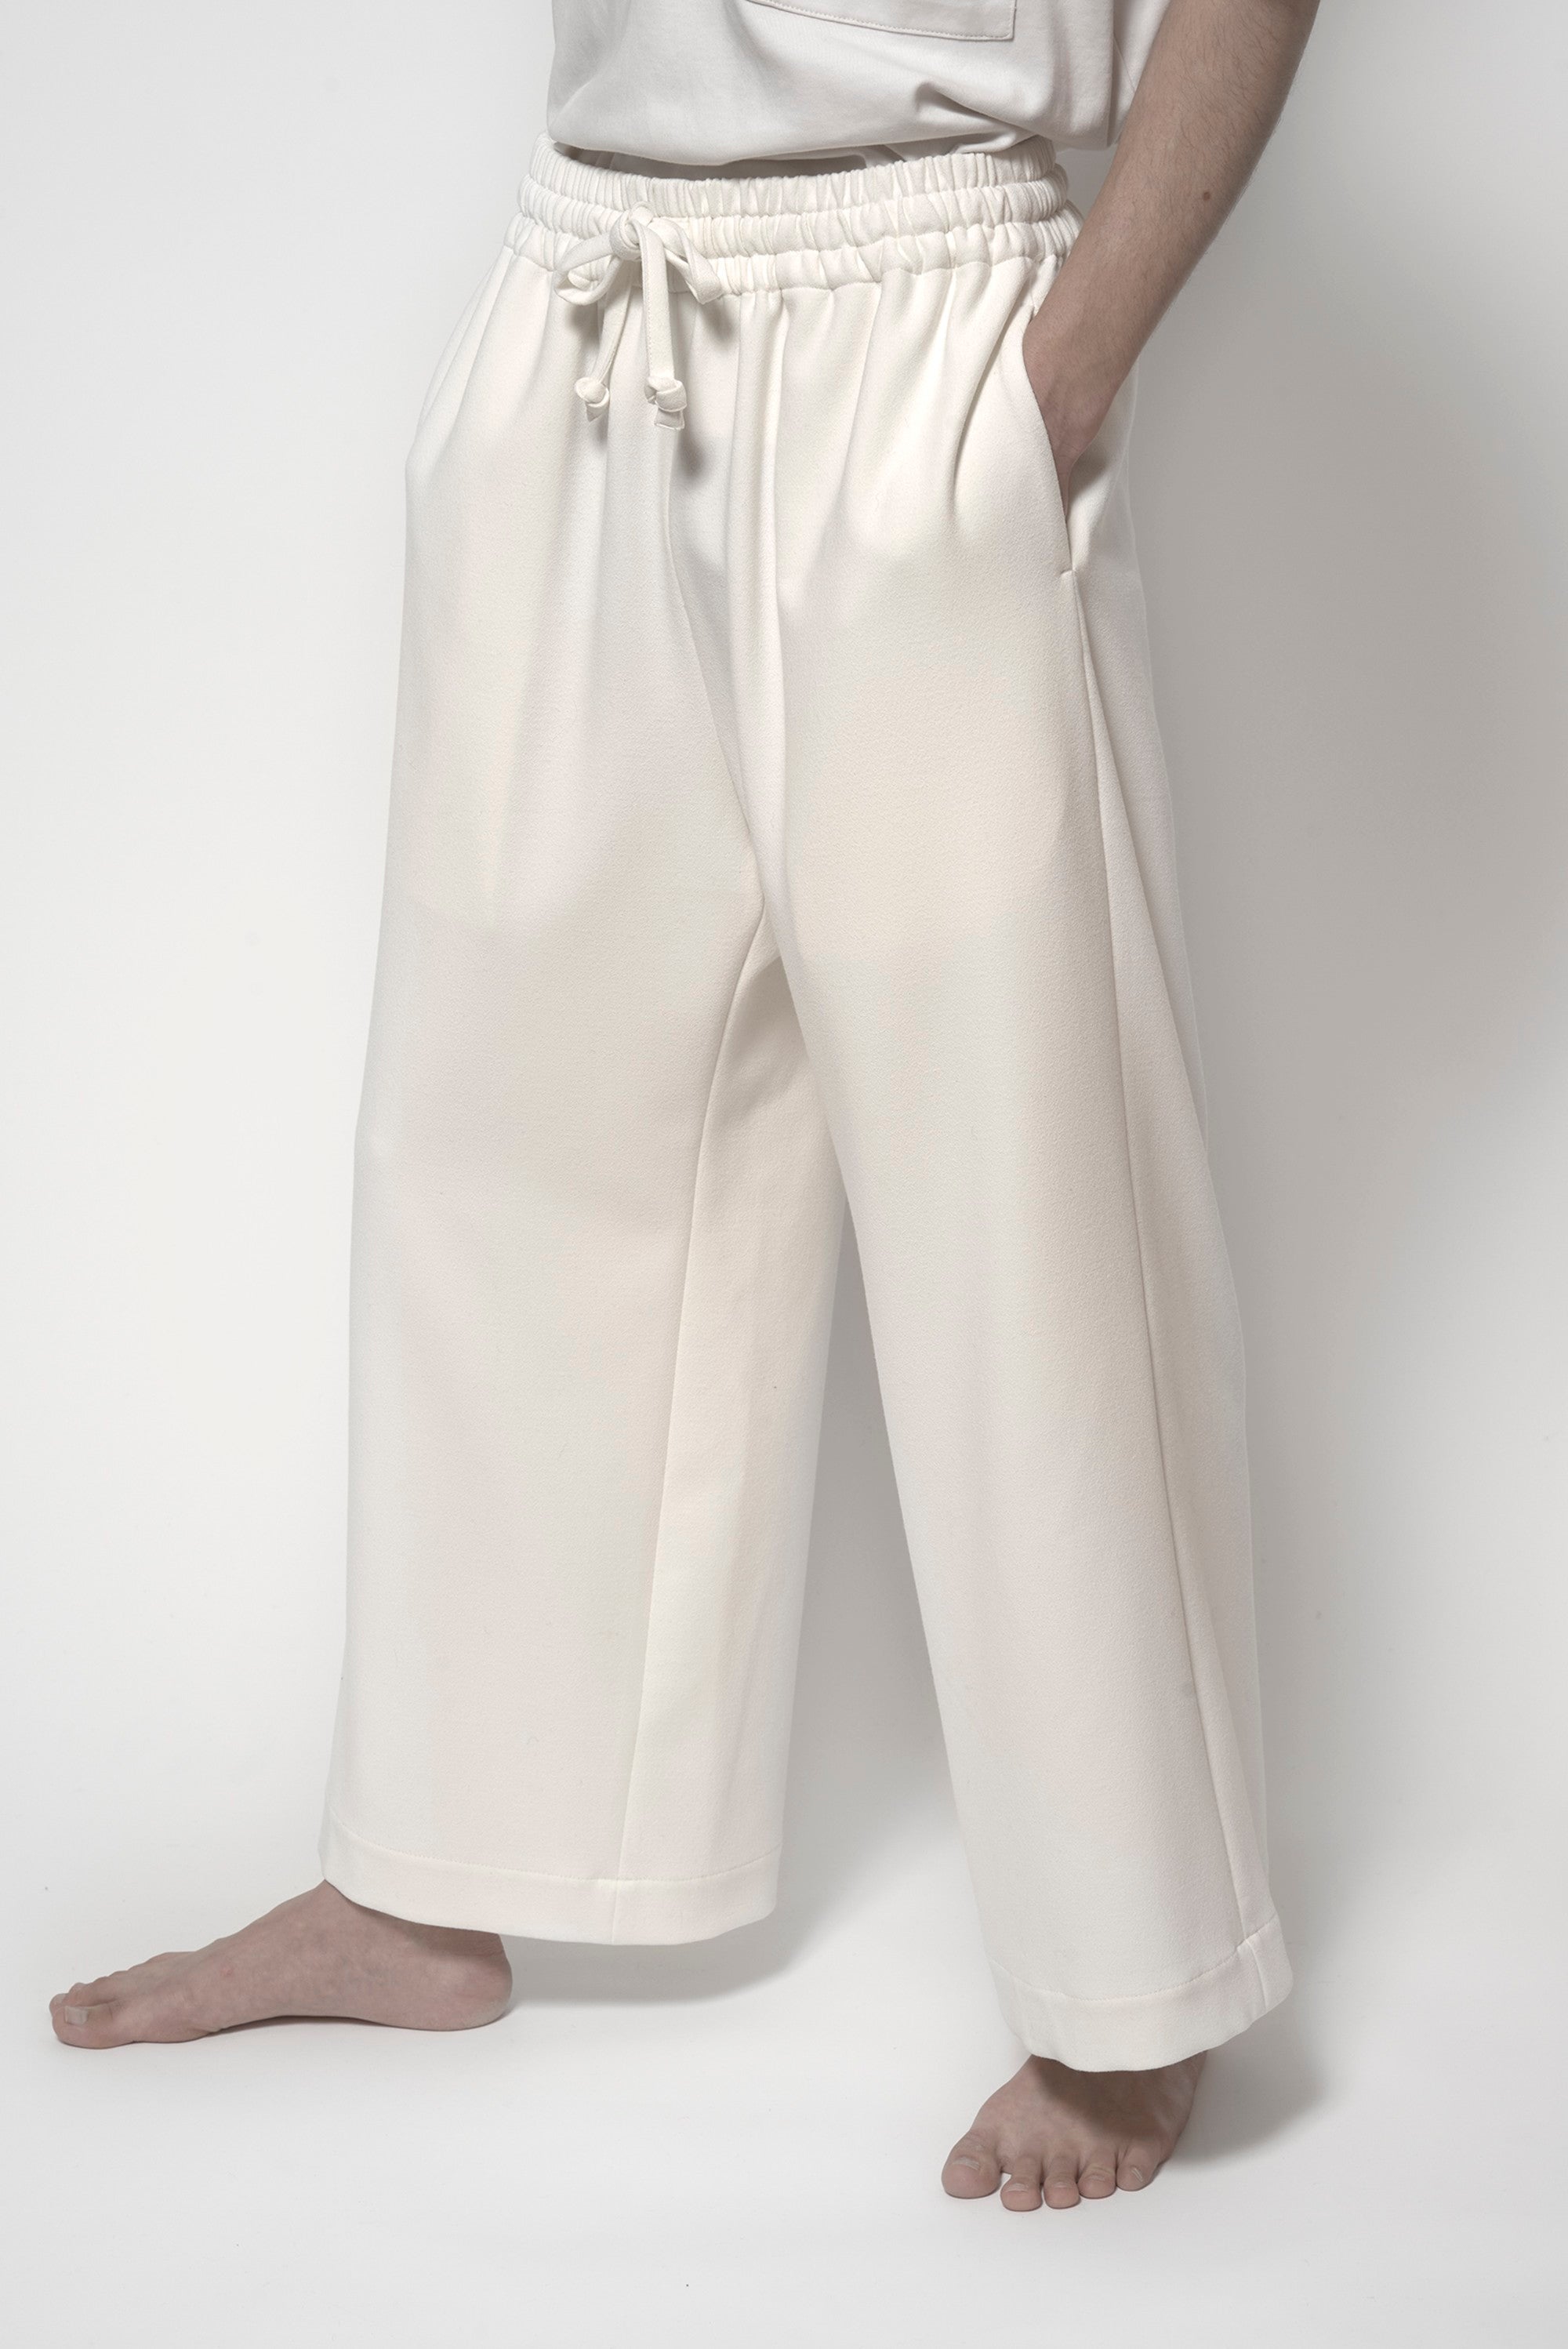 Drawstring pants white amunzen